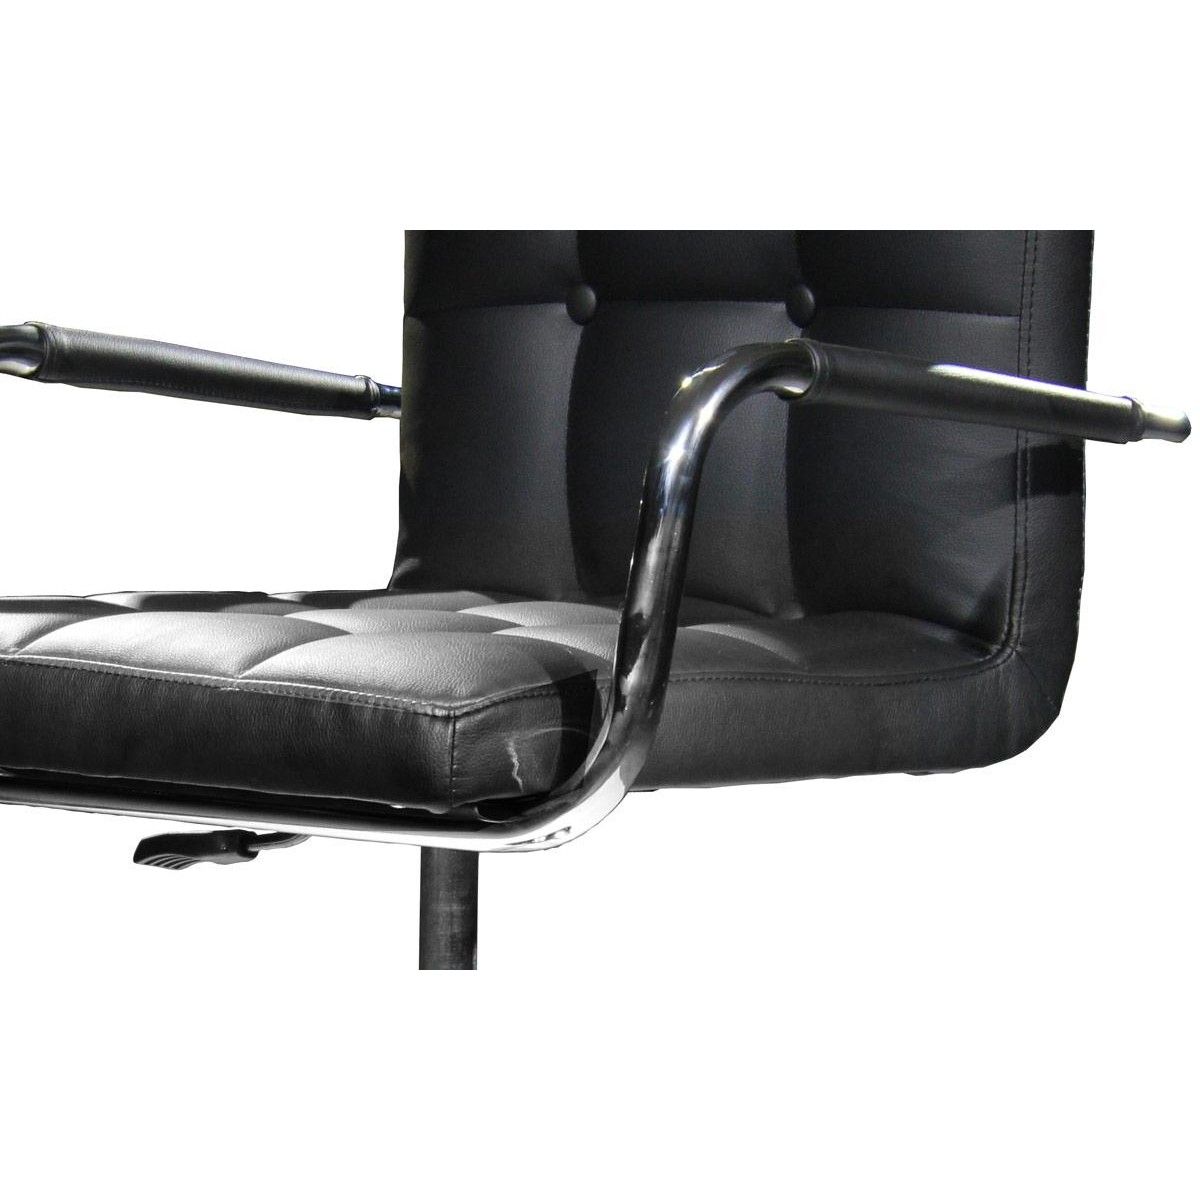 Contemporary & Luxury Furniture; Living Room, Bedroom,la Furniture Regarding Leather Black Swivel Chairs (Photo 24 of 25)